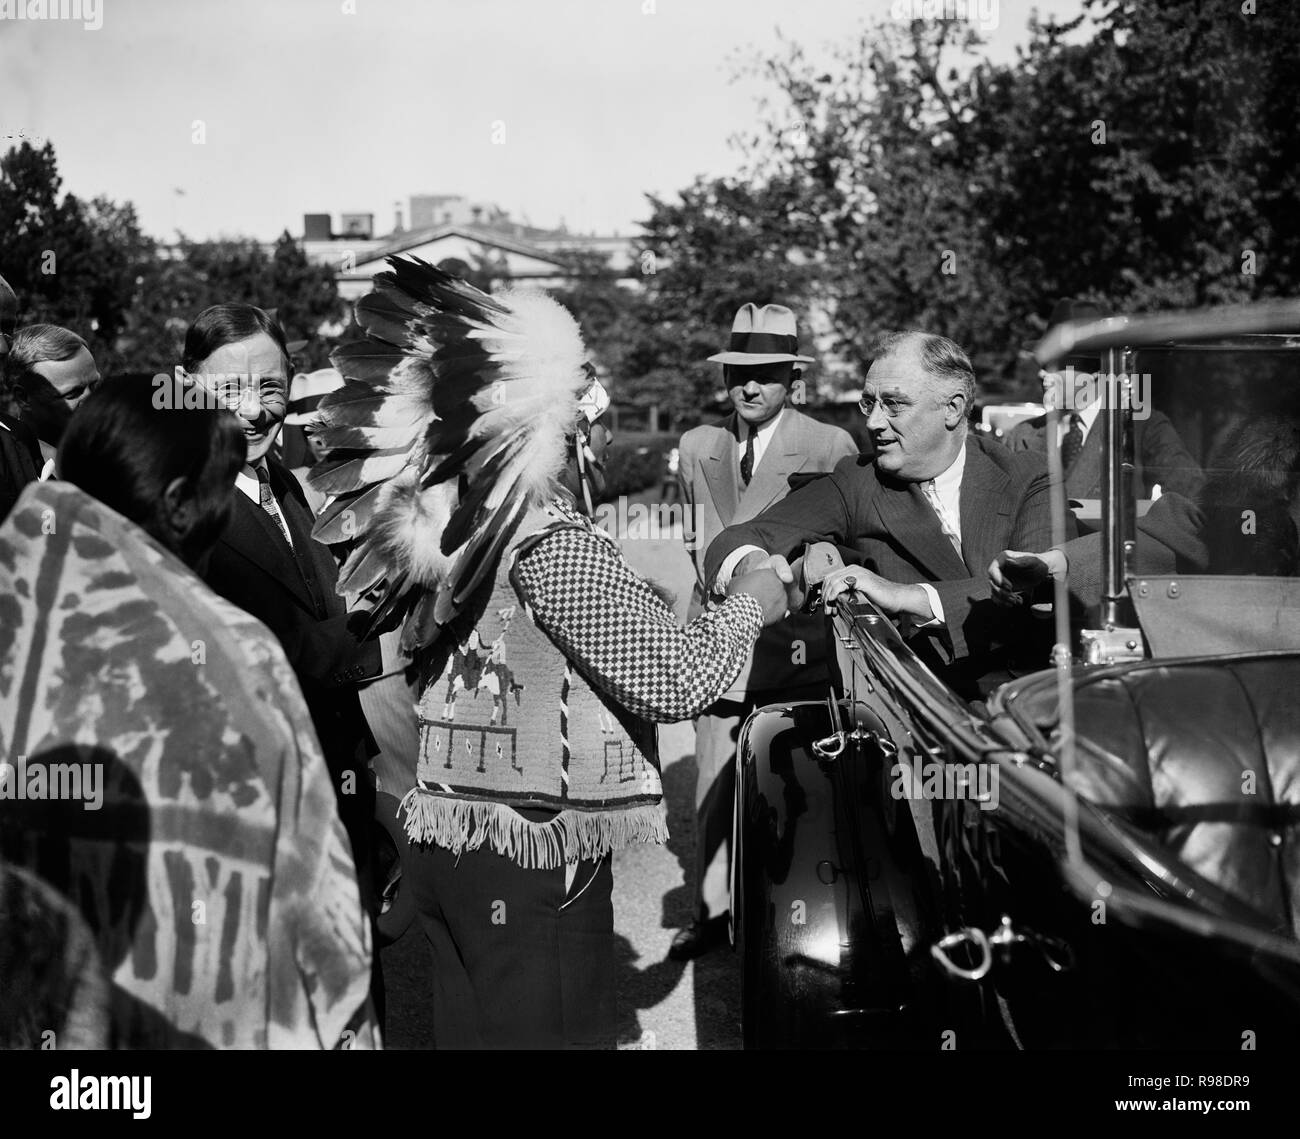 U.S. President Franklin Roosevelt Greeting Pueblo Indians while sitting in Convertible Car, Washington DC, USA, Harris & Ewing, 1936 Stock Photo